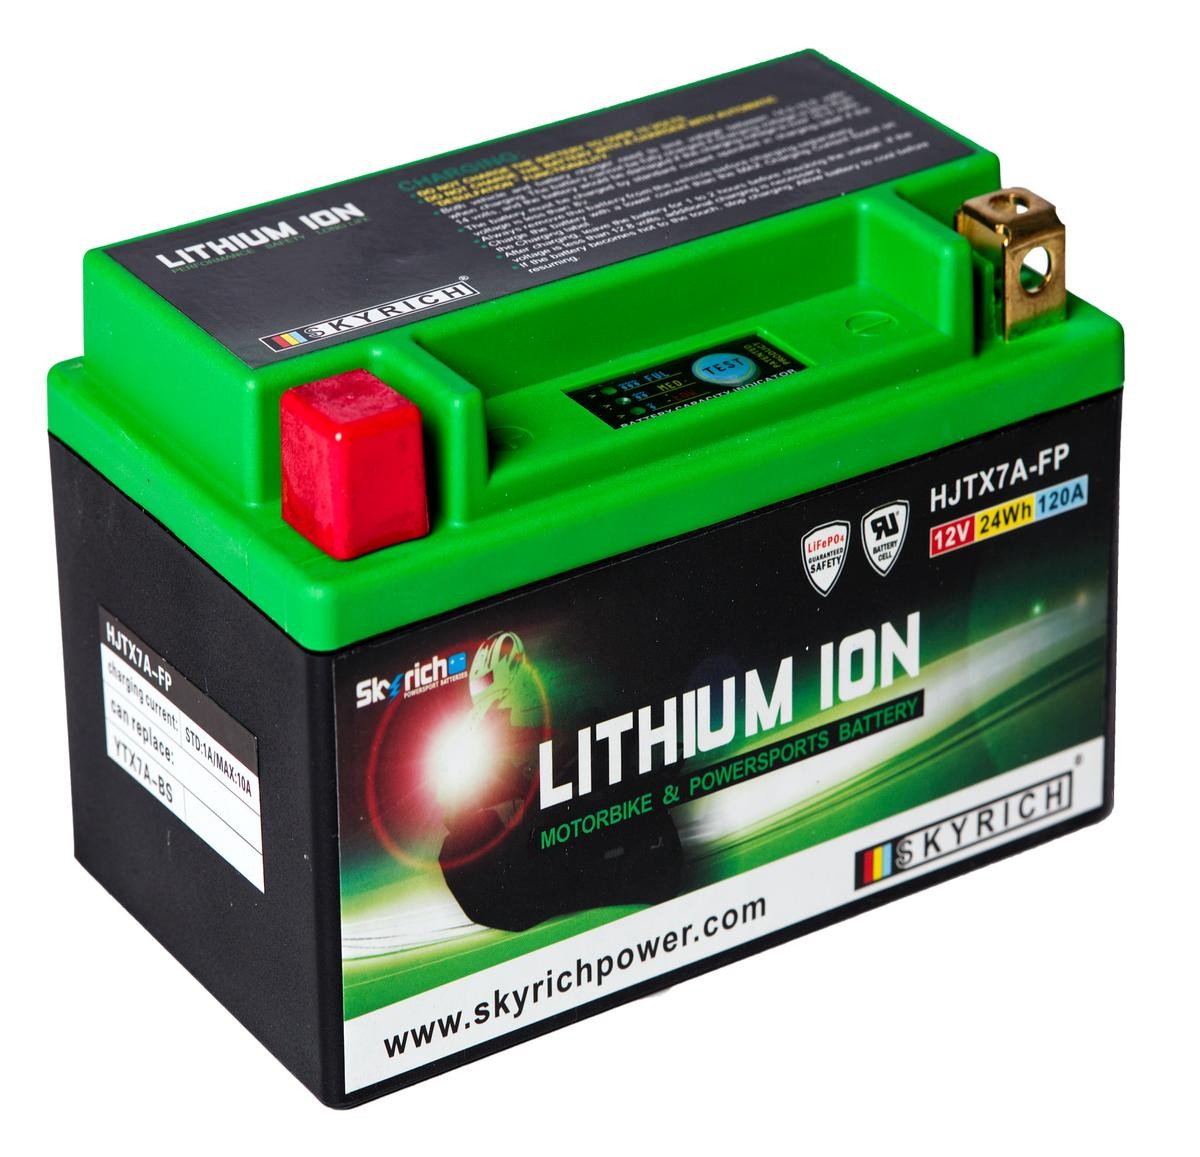 PGO G-MAX Batterie 12V 2Ah 120A N Li-Ionen-Batterie SKYRICH LITHIUM ION HJTX7A-FP